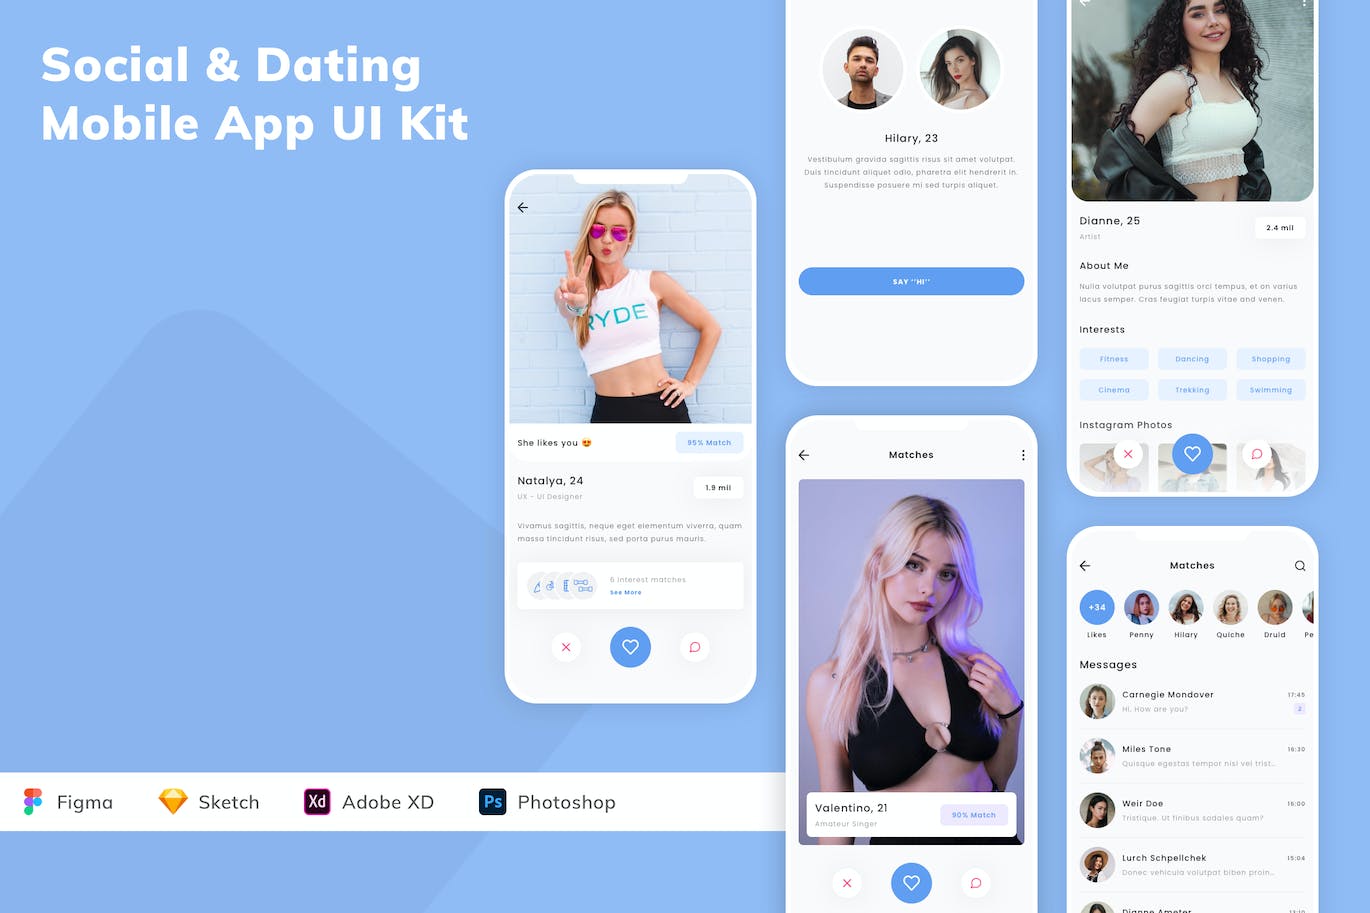 社交和约会移动应用UI套件 Social & Dating Mobile App UI Kit